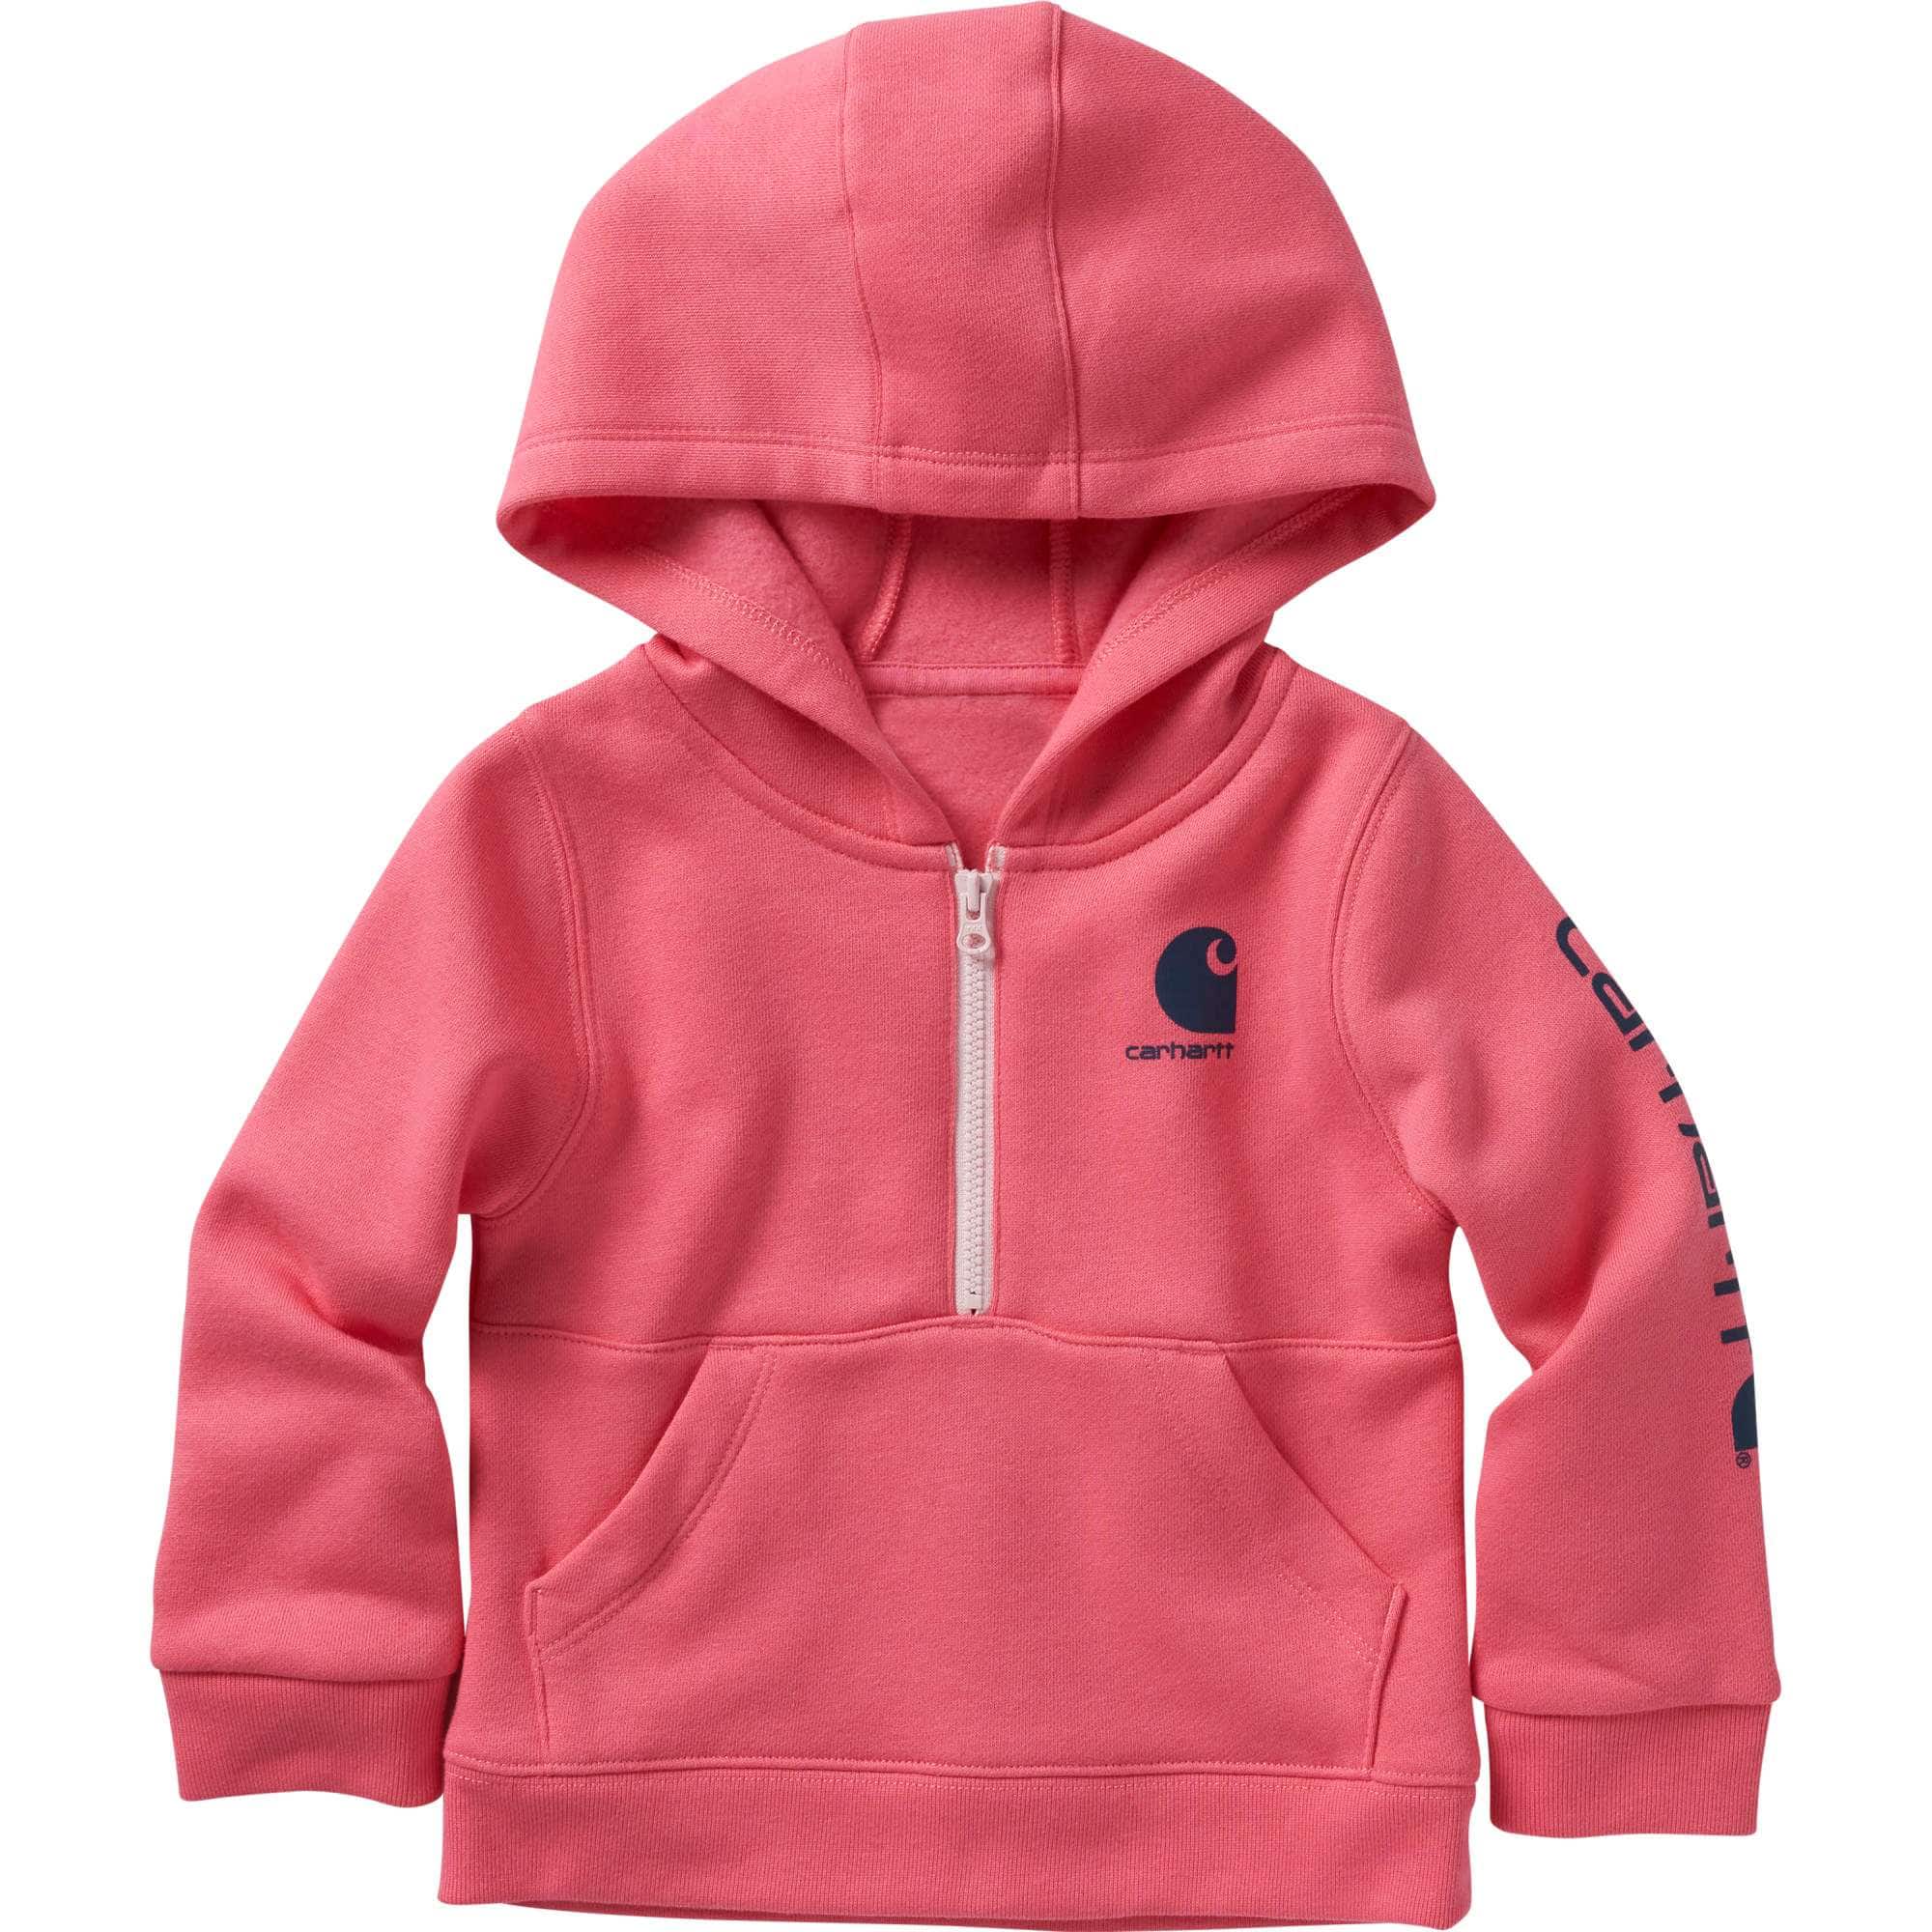 Girls' Long-Sleeve Half-Zip Sweatshirt (Infant/Toddler)